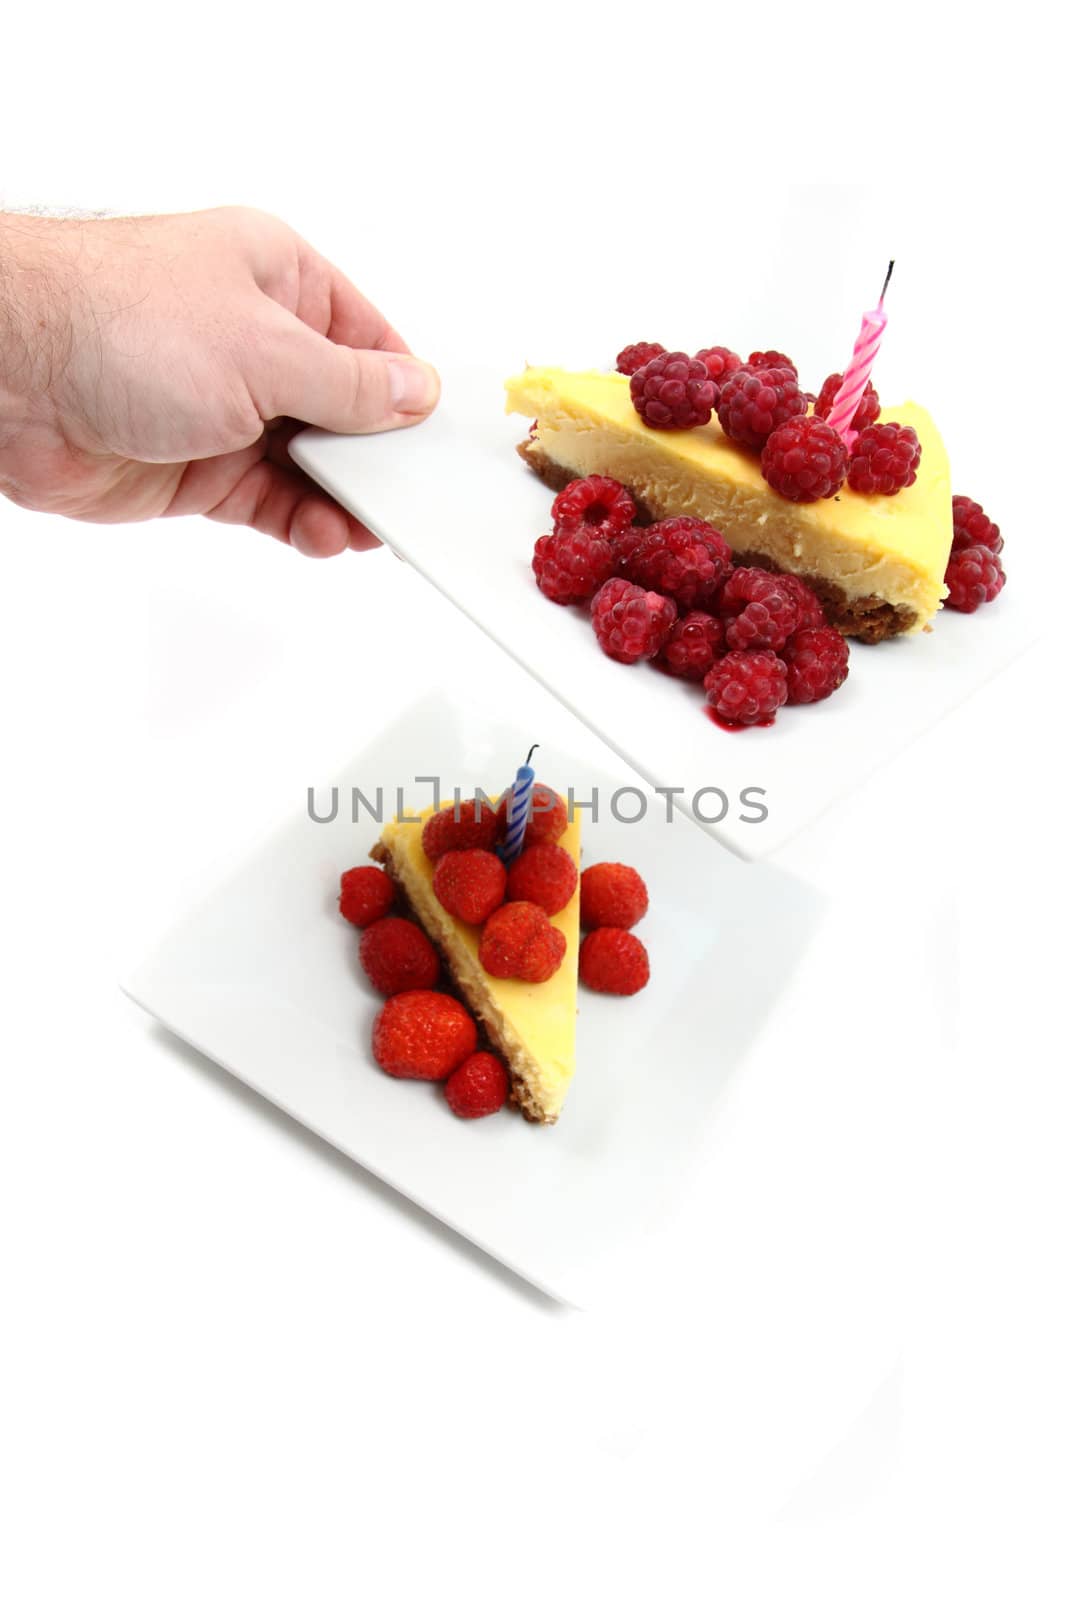 cheesecake by jonnysek